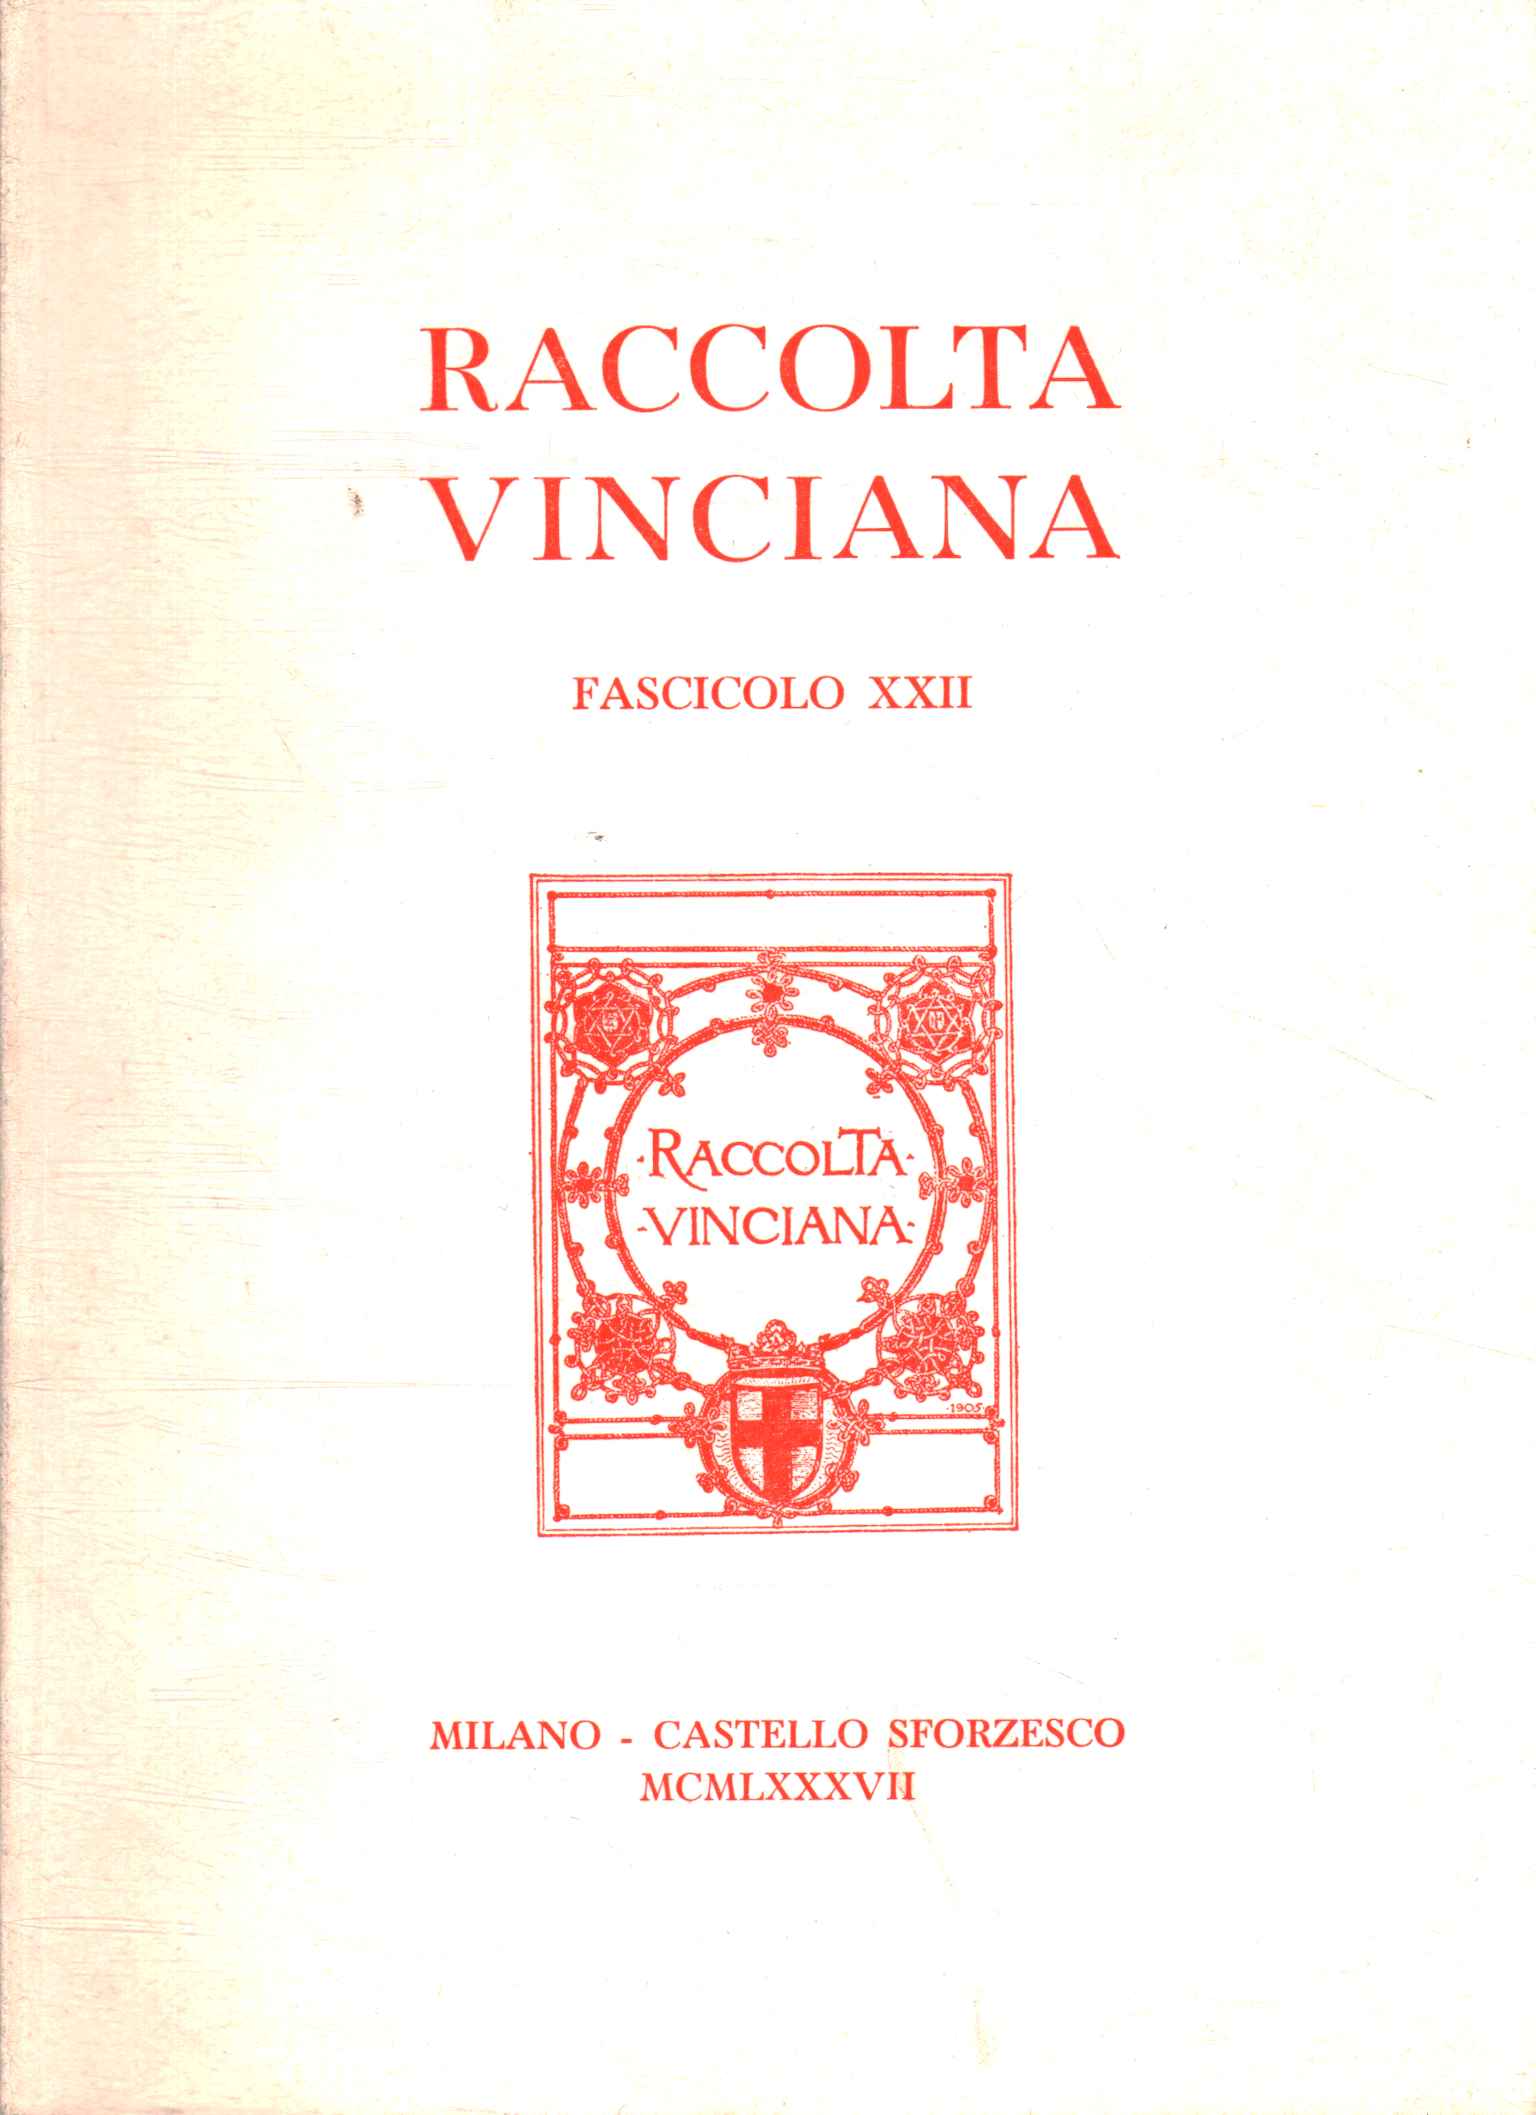 Vinciana Collection Issue XXII, Vinciana Collection Issue XXII, Vinciana Collection Issue XXII, Vinciana Collection Issue XXII